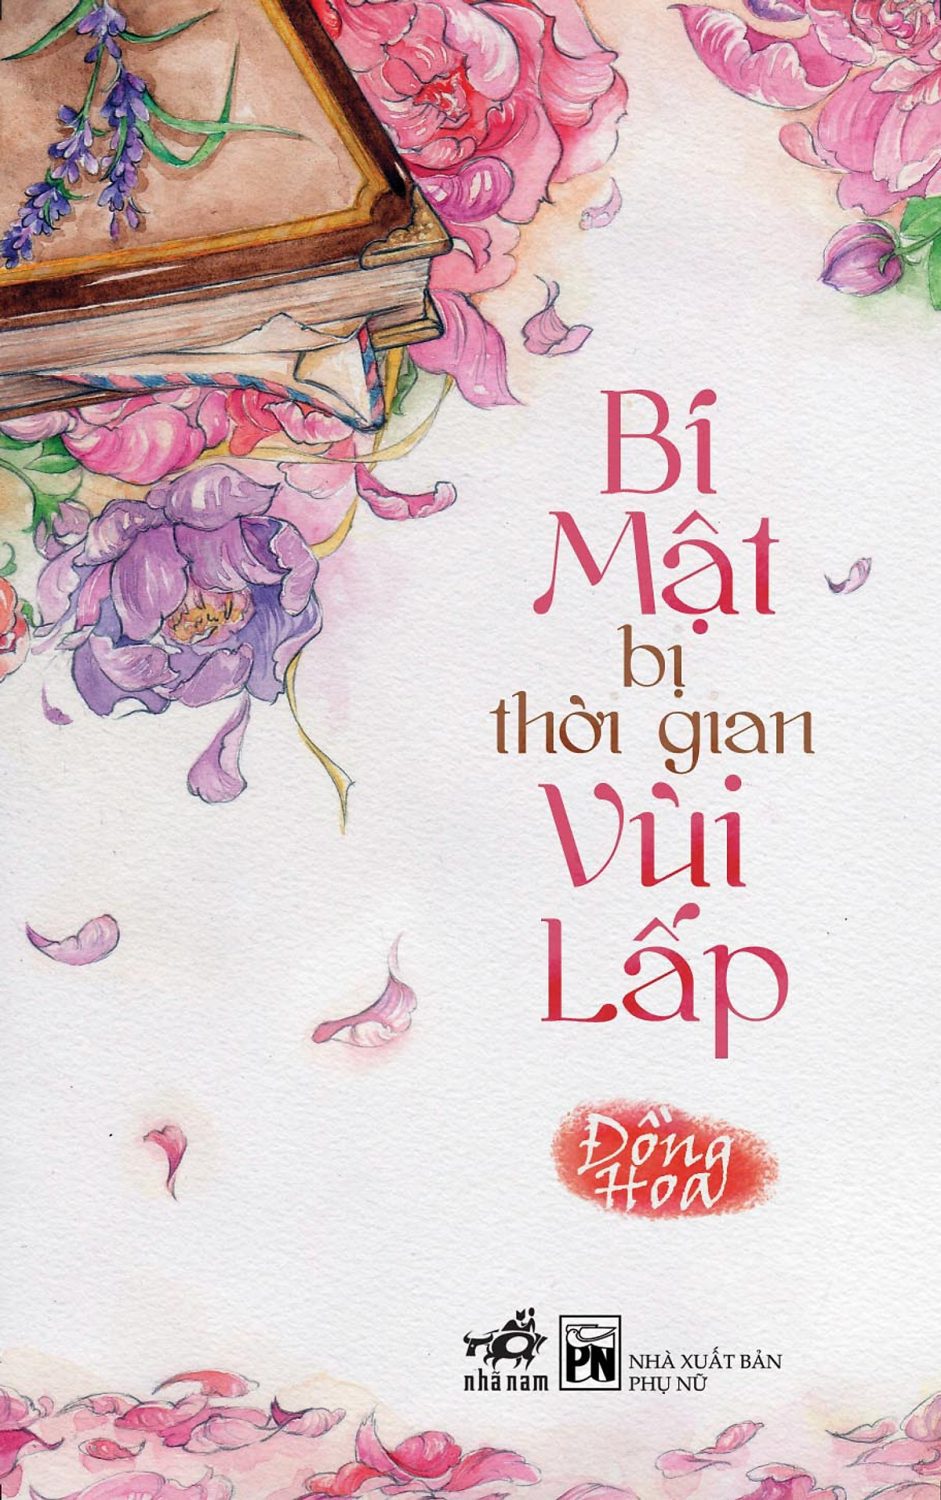 Bi Mat Bi Thoi Gian Vui Lap Scaled